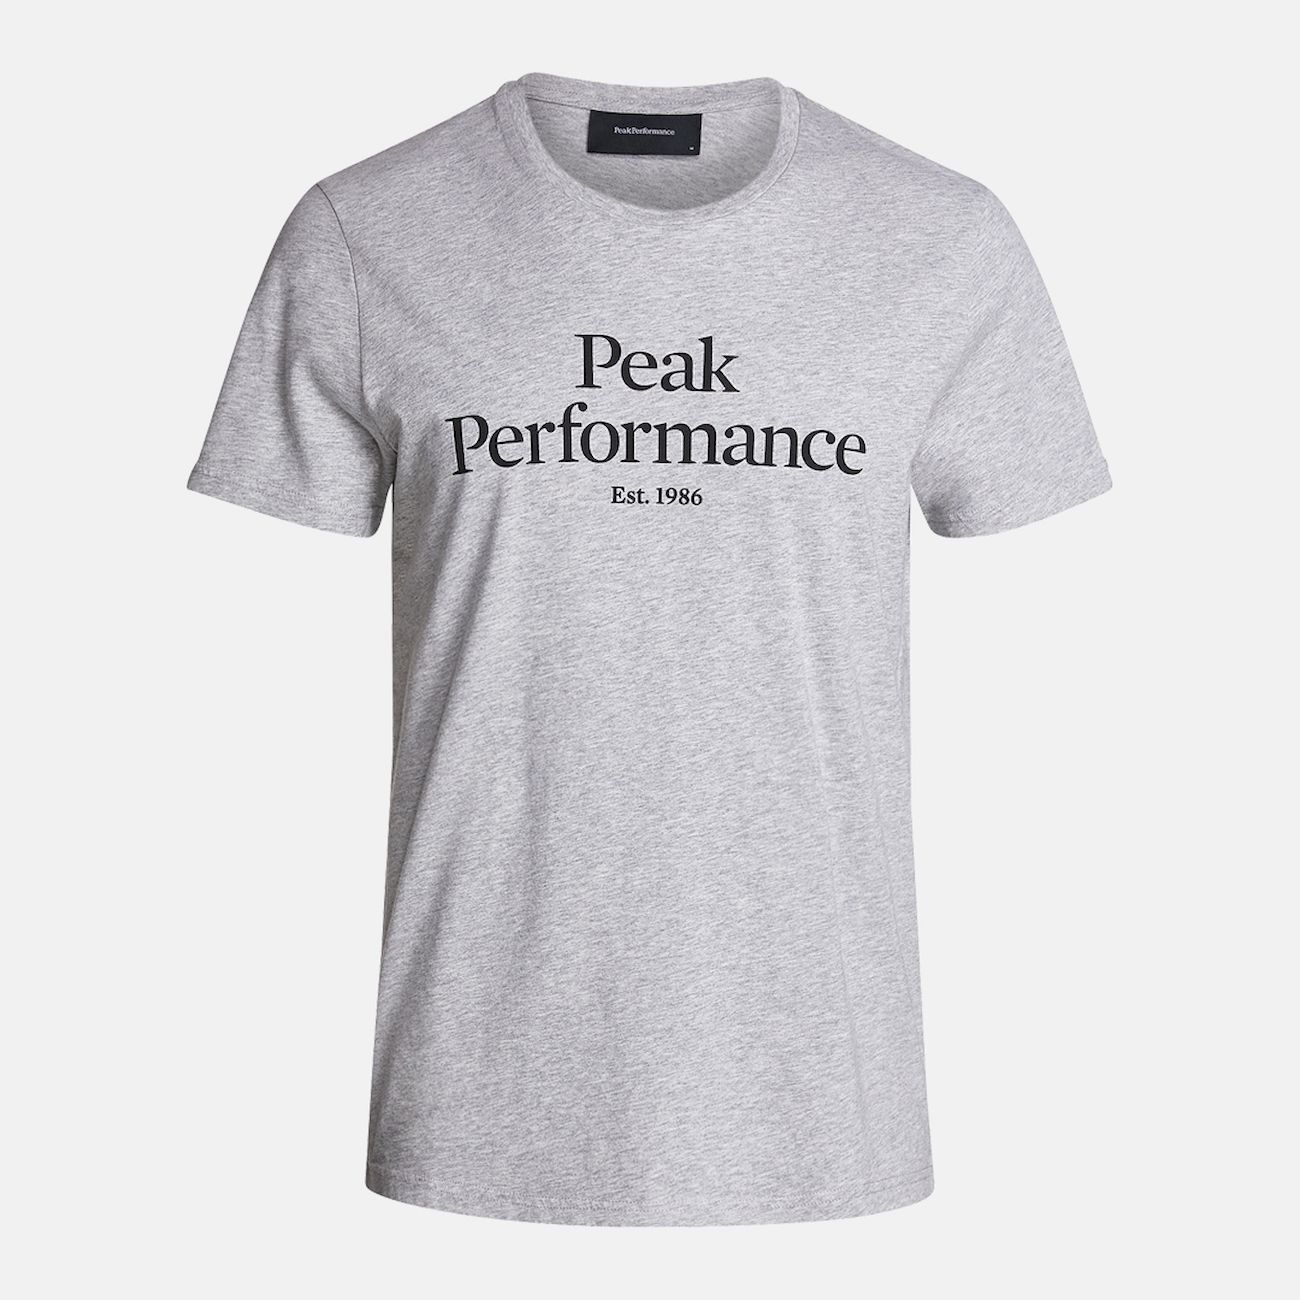 Peak Performance Original Tee - T-Shirt - Herren